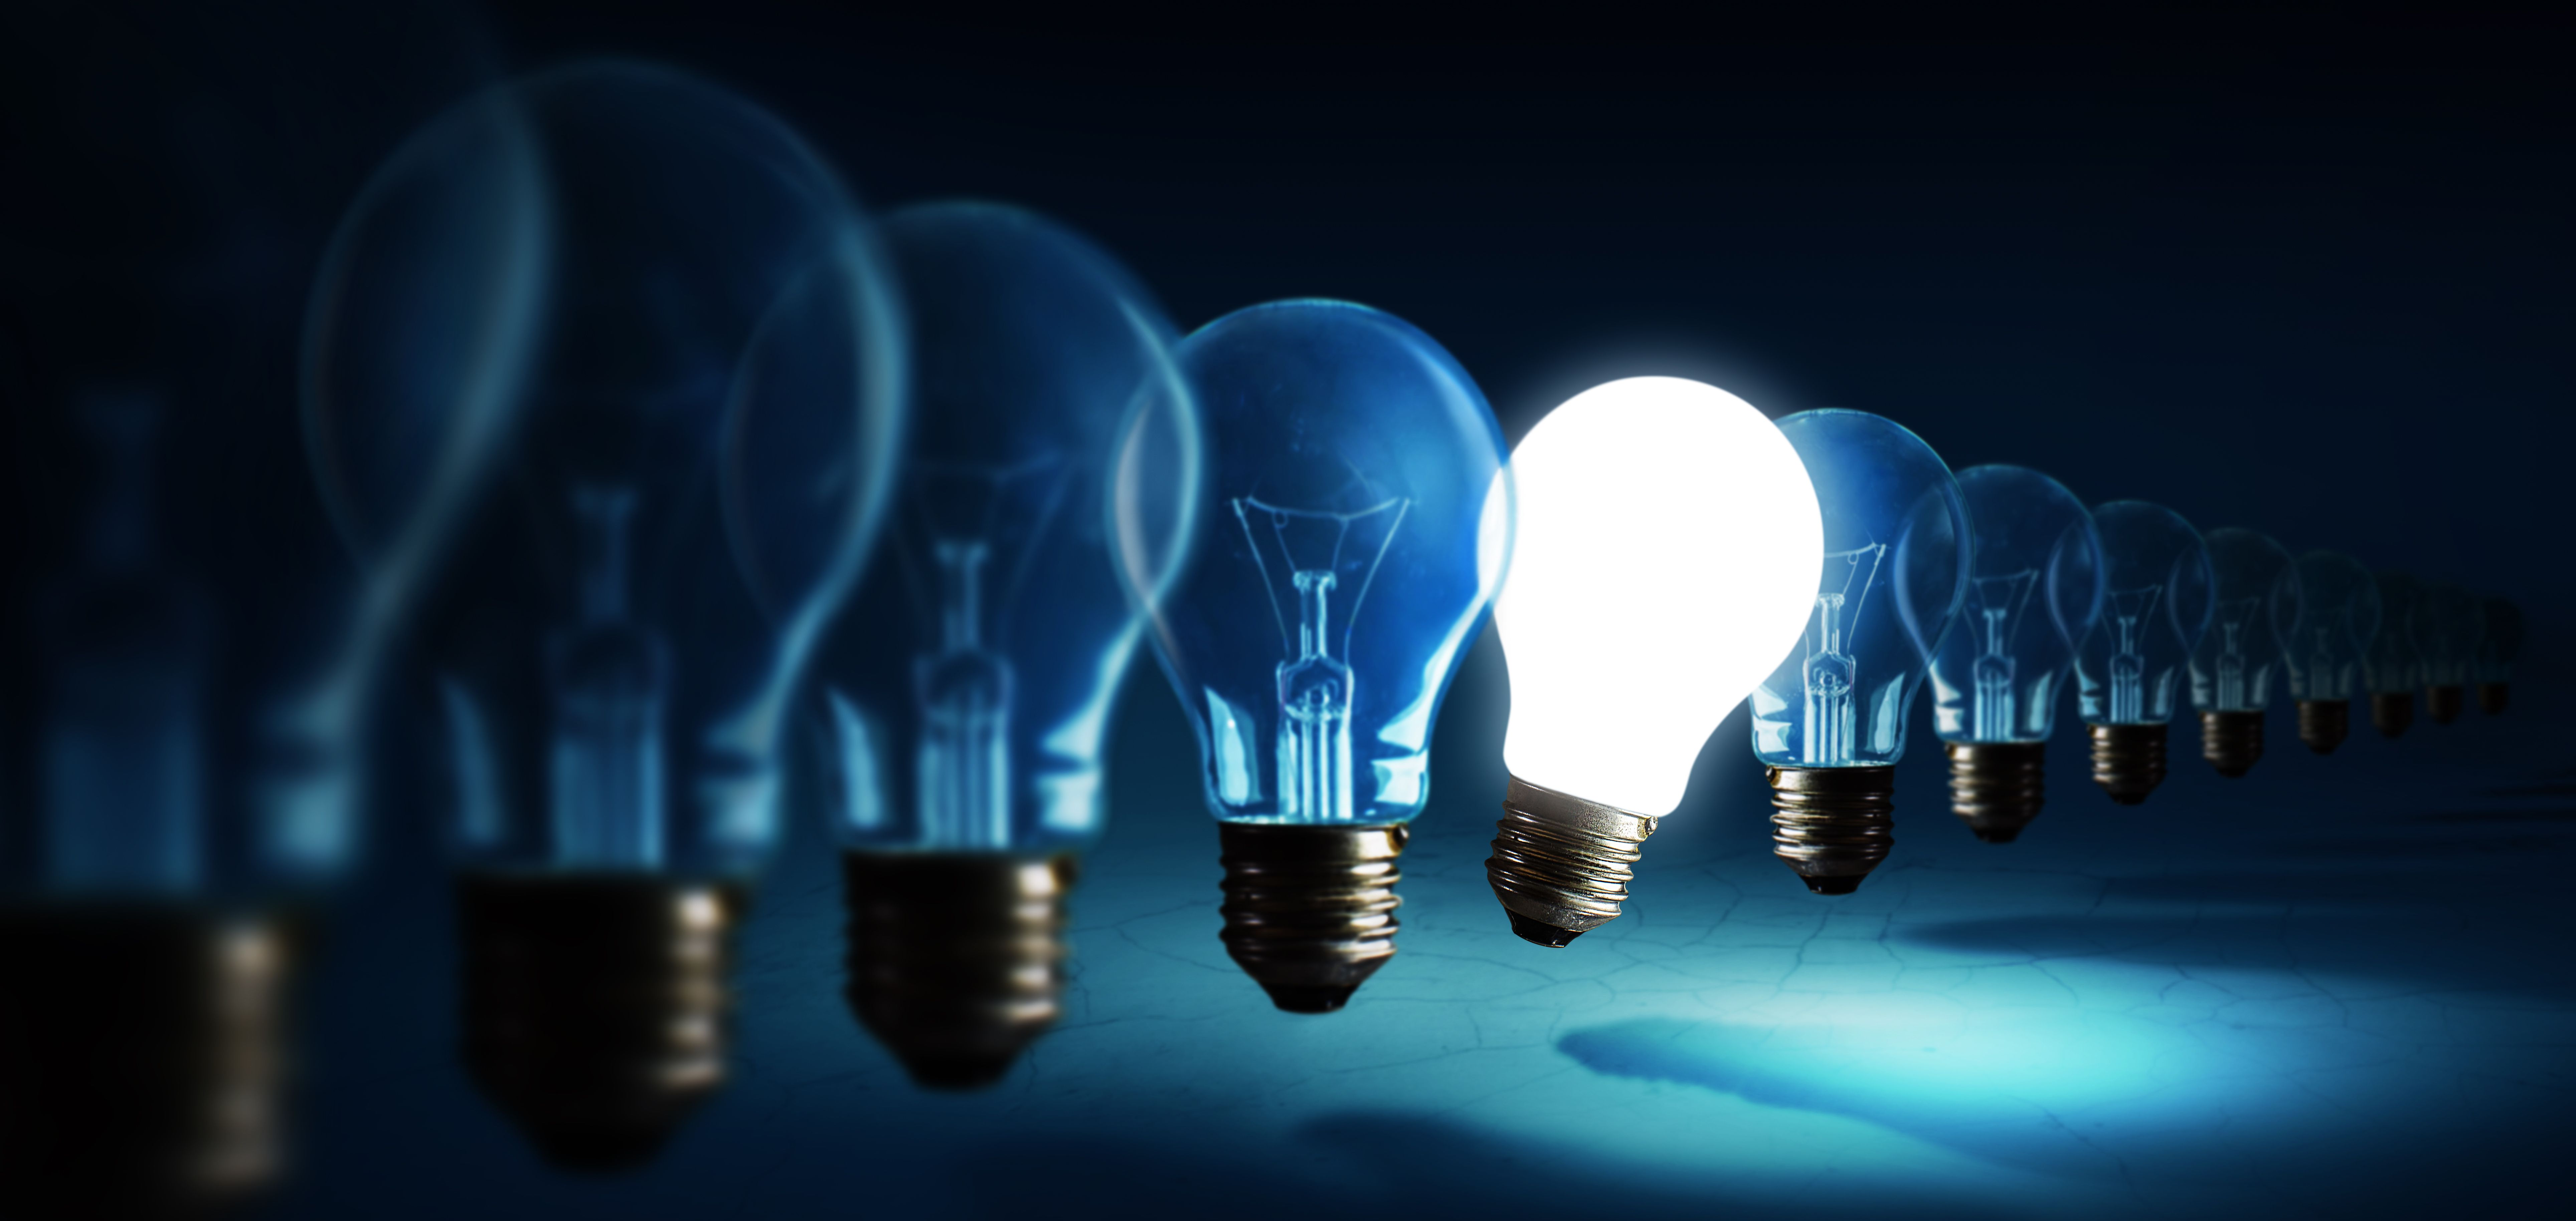 lightbulbs-blue-background-idea-concept